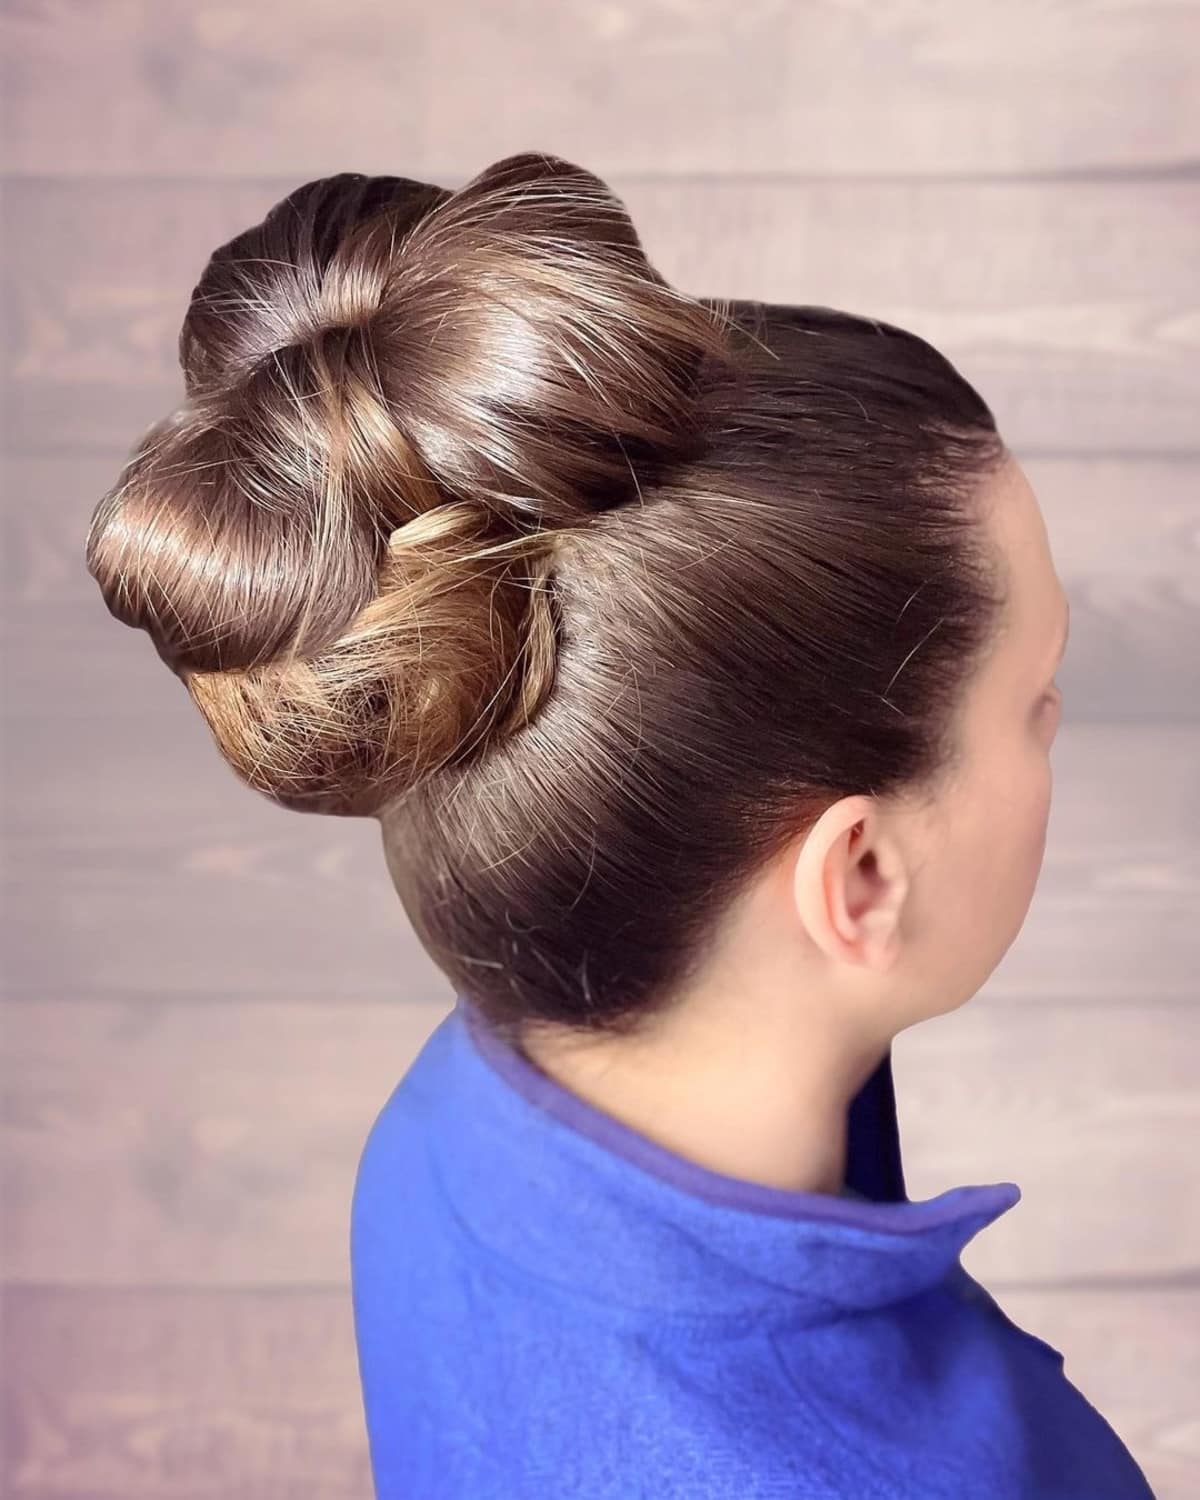 Simple 60s top bun hairstyle